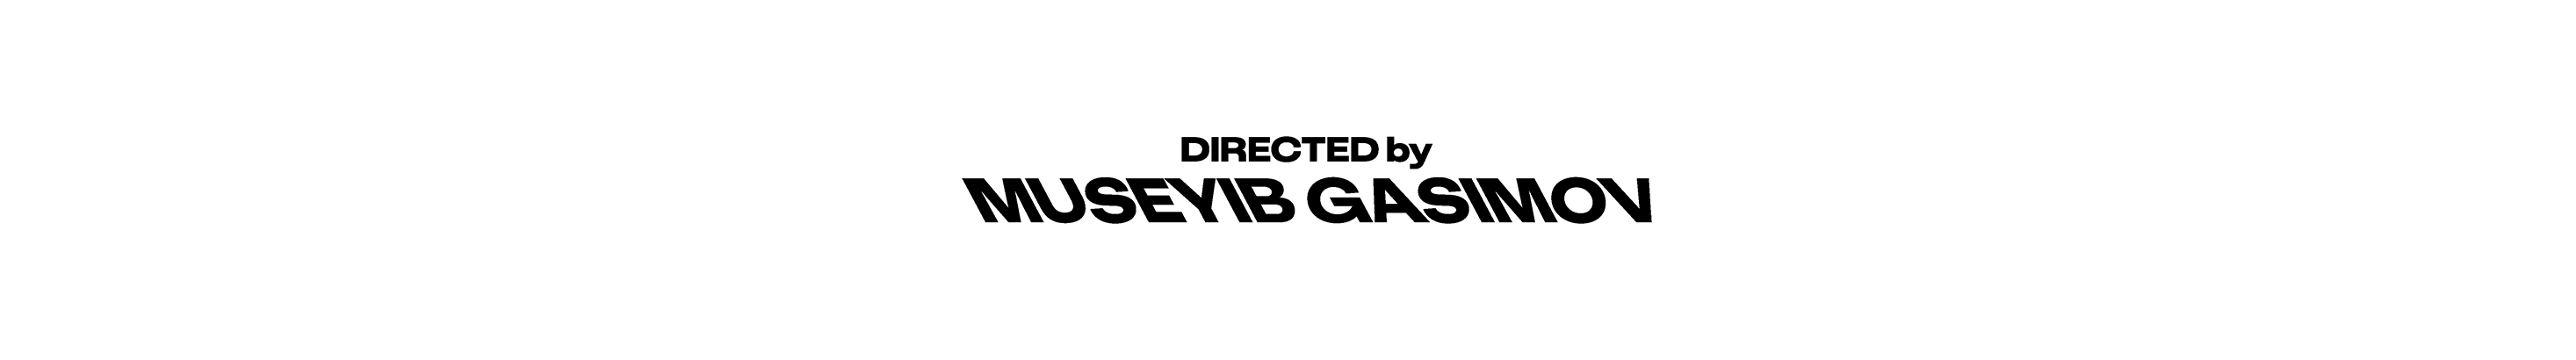 Museyib Gasimov's profile banner